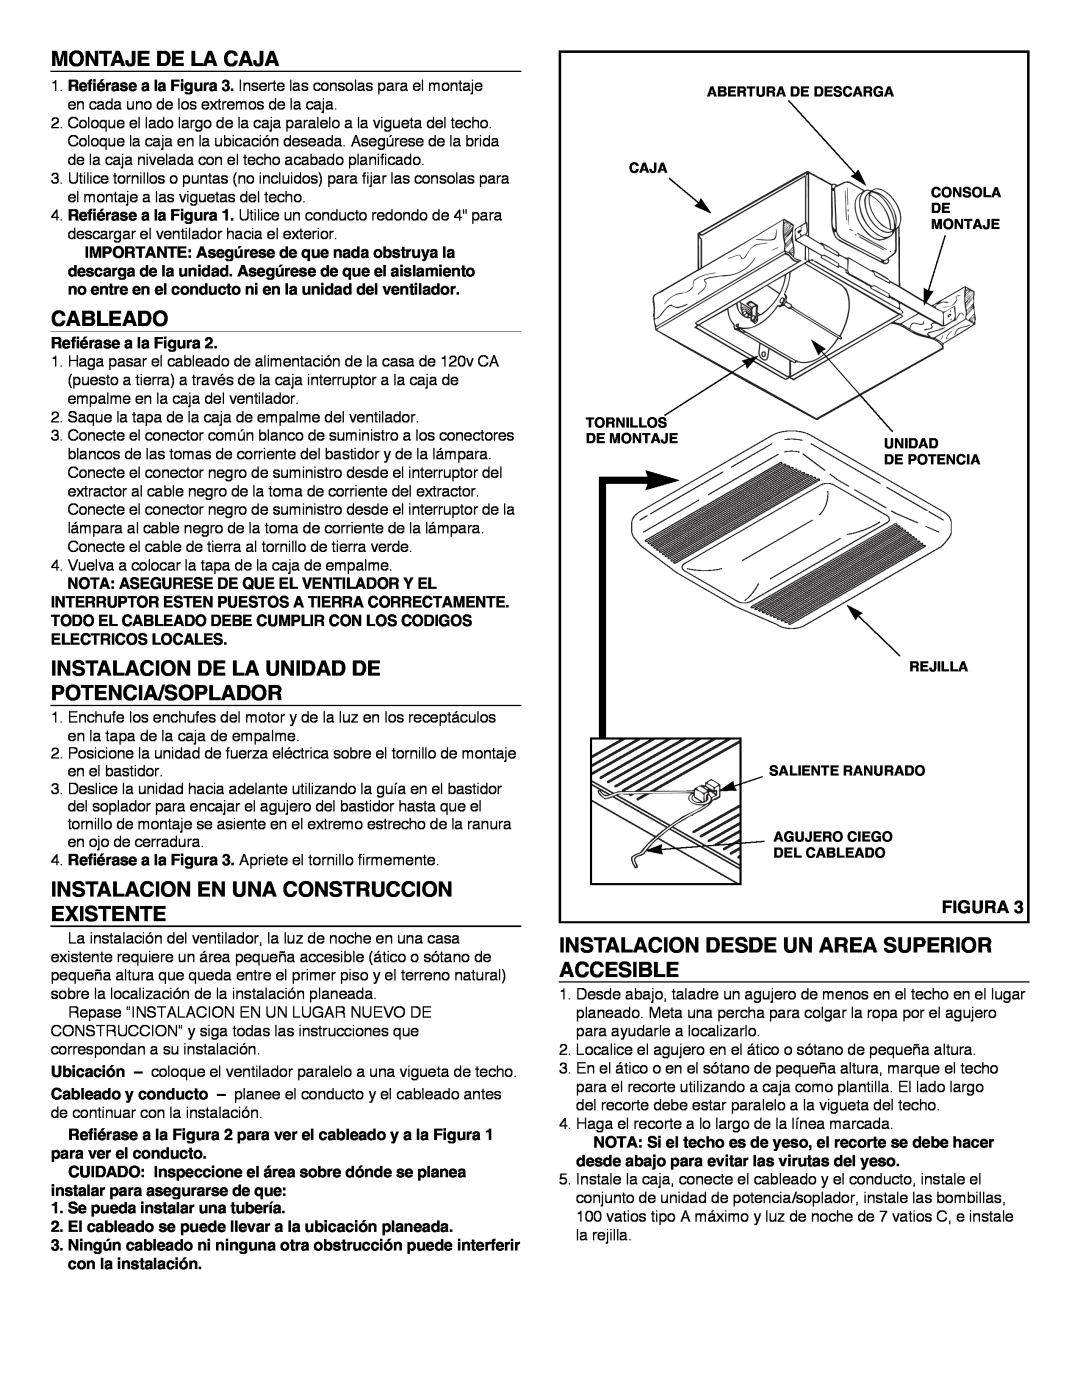 NuTone LS80L, LS100L Montaje De La Caja, Cableado, Instalacion De La Unidad De Potencia/Soplador, Figura 